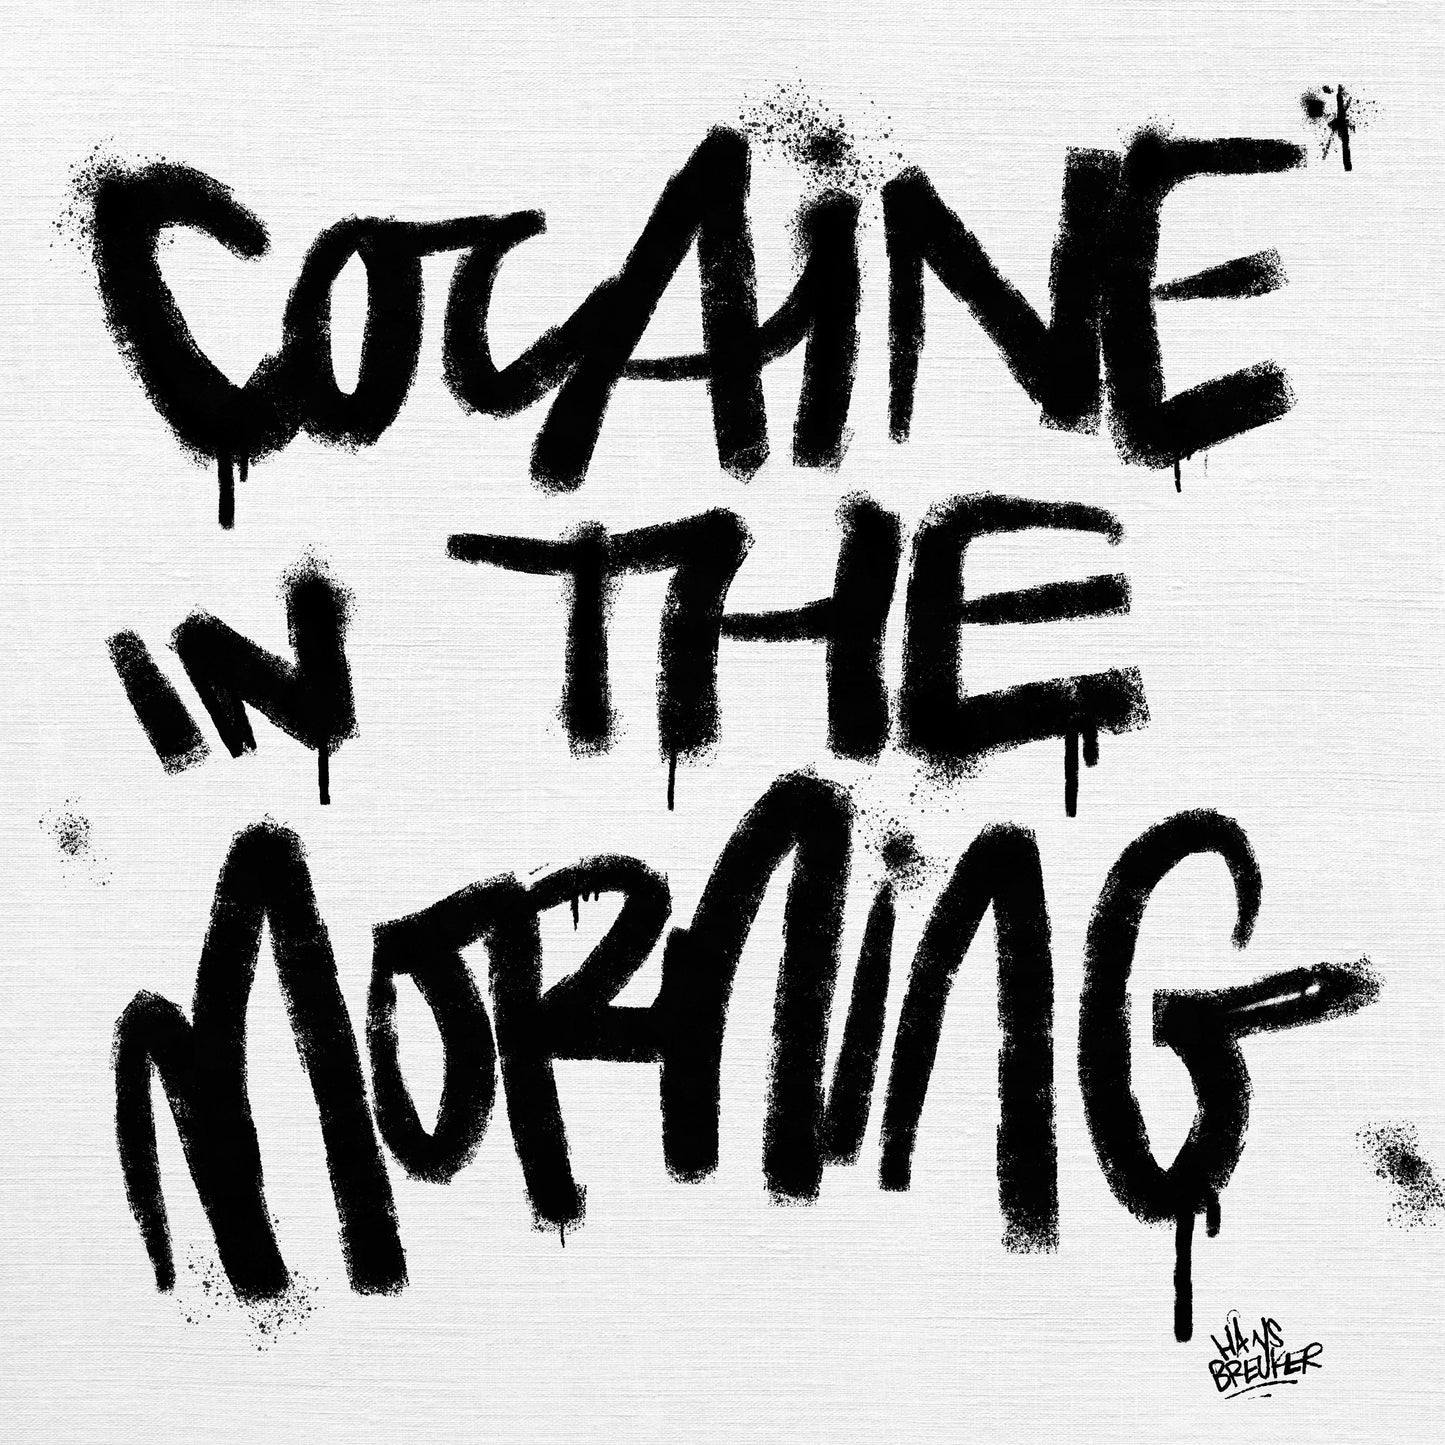 Cocaine in the morning uniek schilderij 150 x 150 cm - Hans Breuker